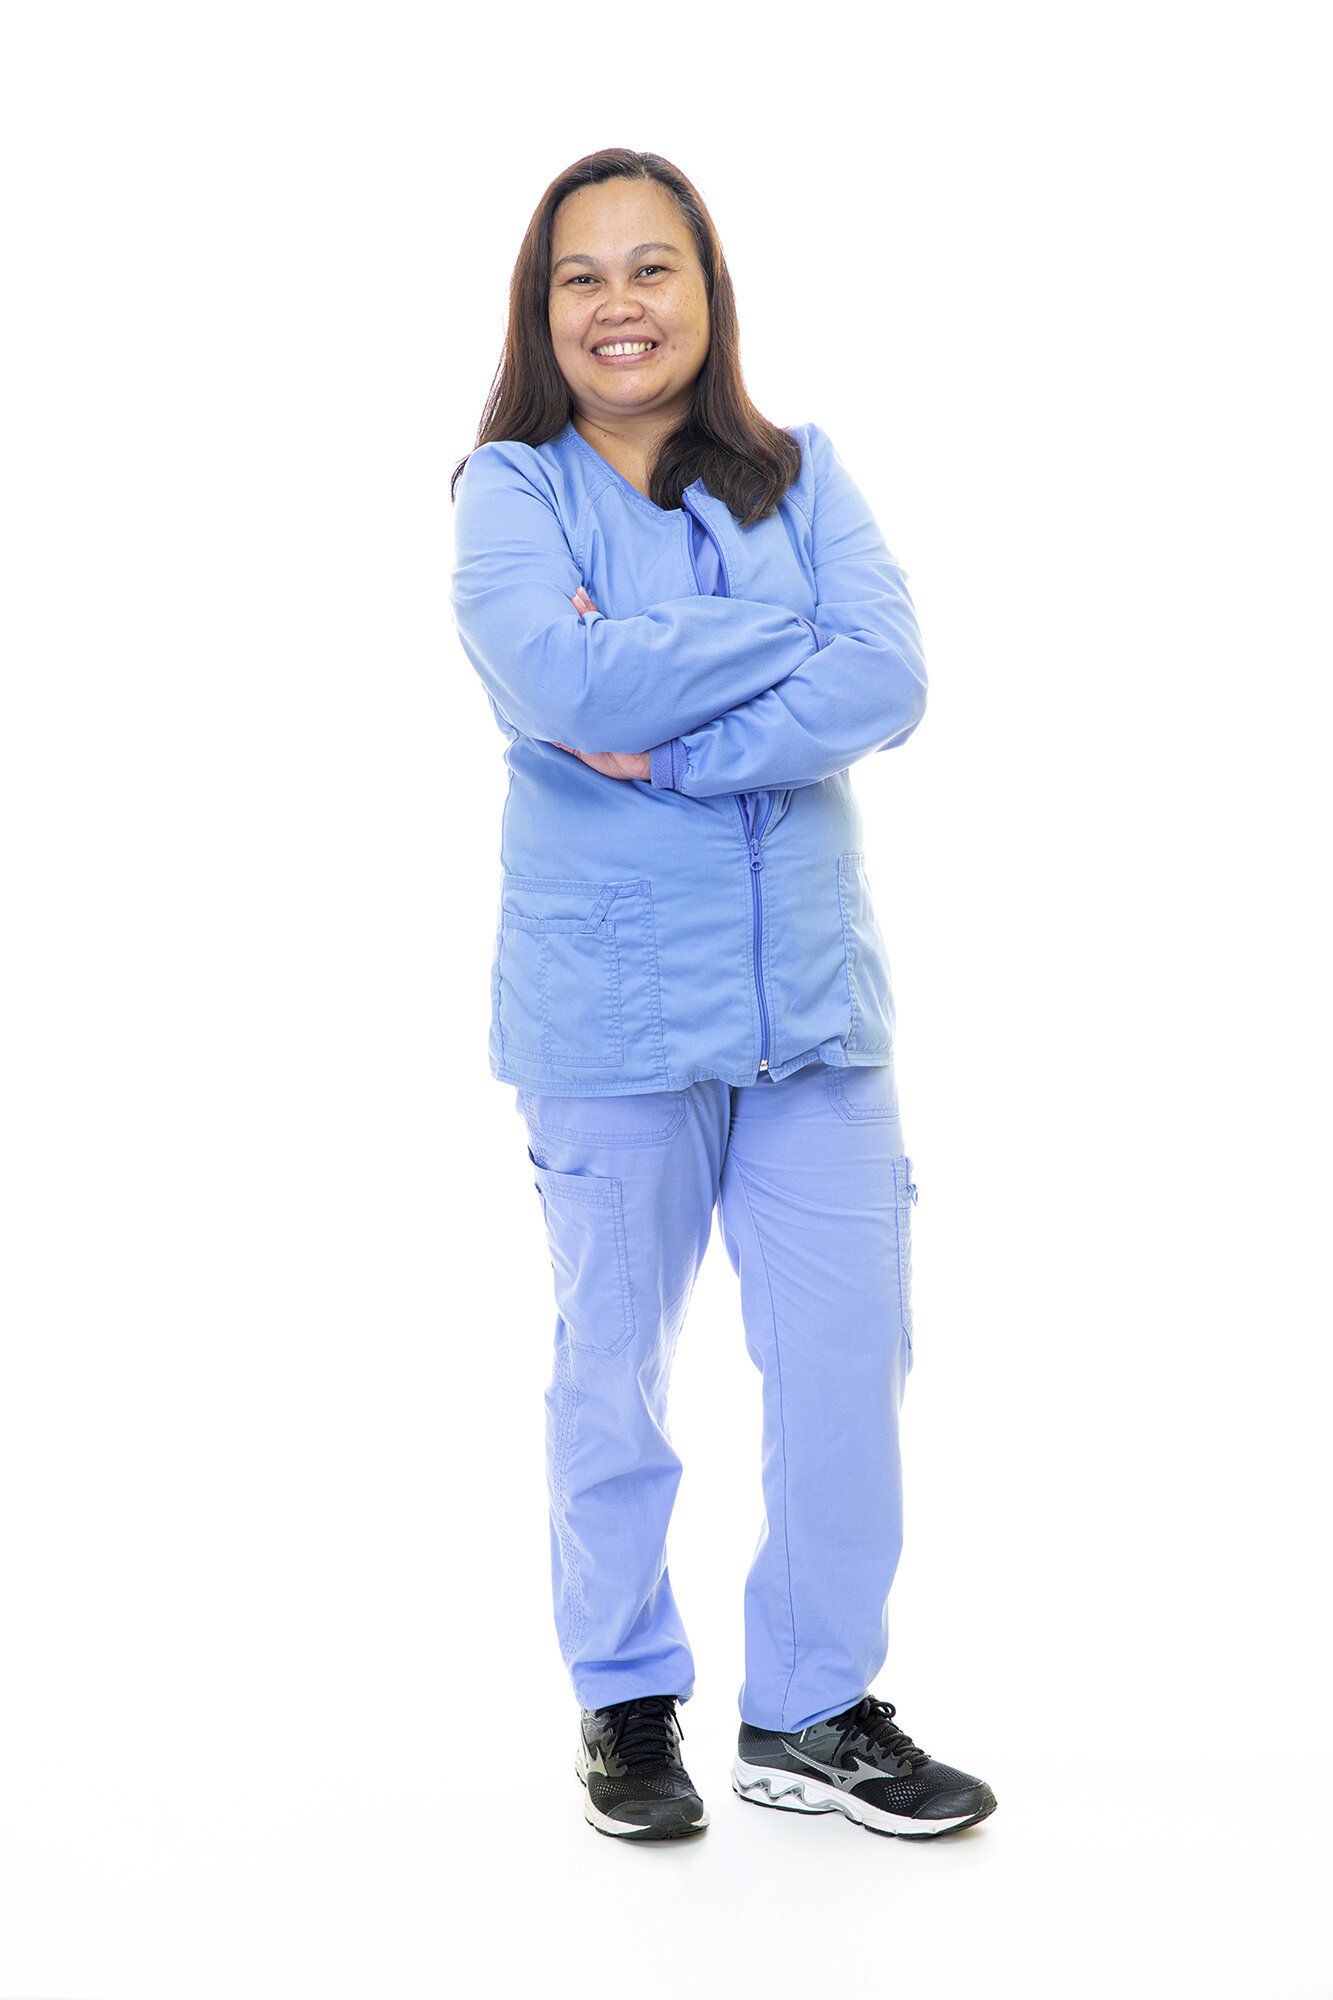 healthcare female nurse hispanic.JPG